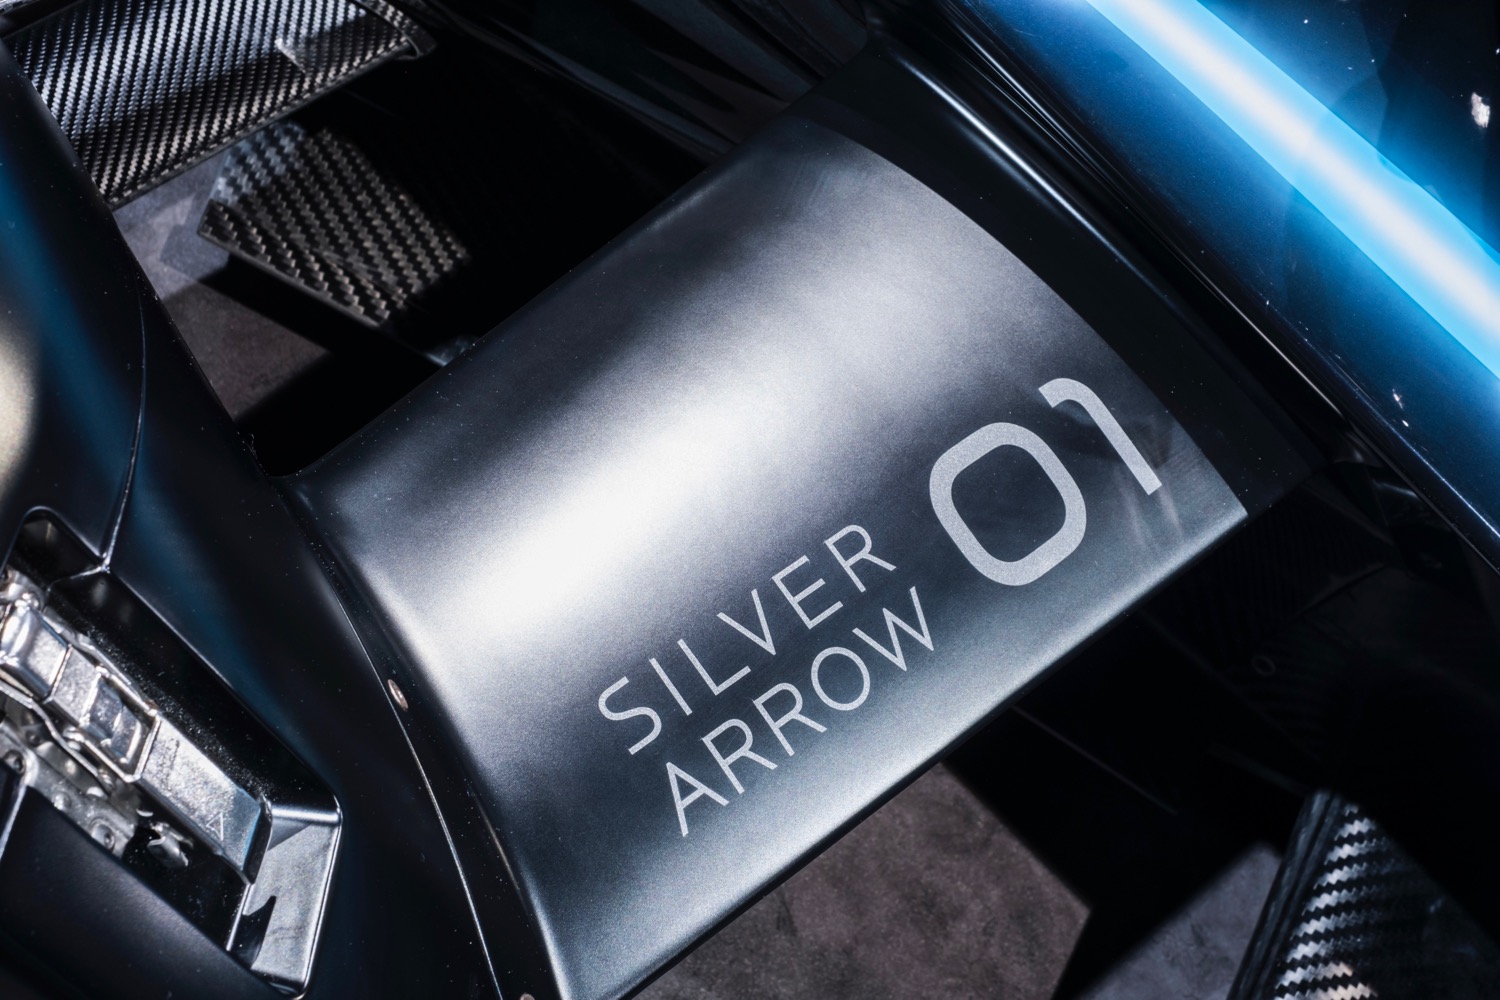 Mercedes-Benz EQ Silver Arrow 01 Formula E electric race car